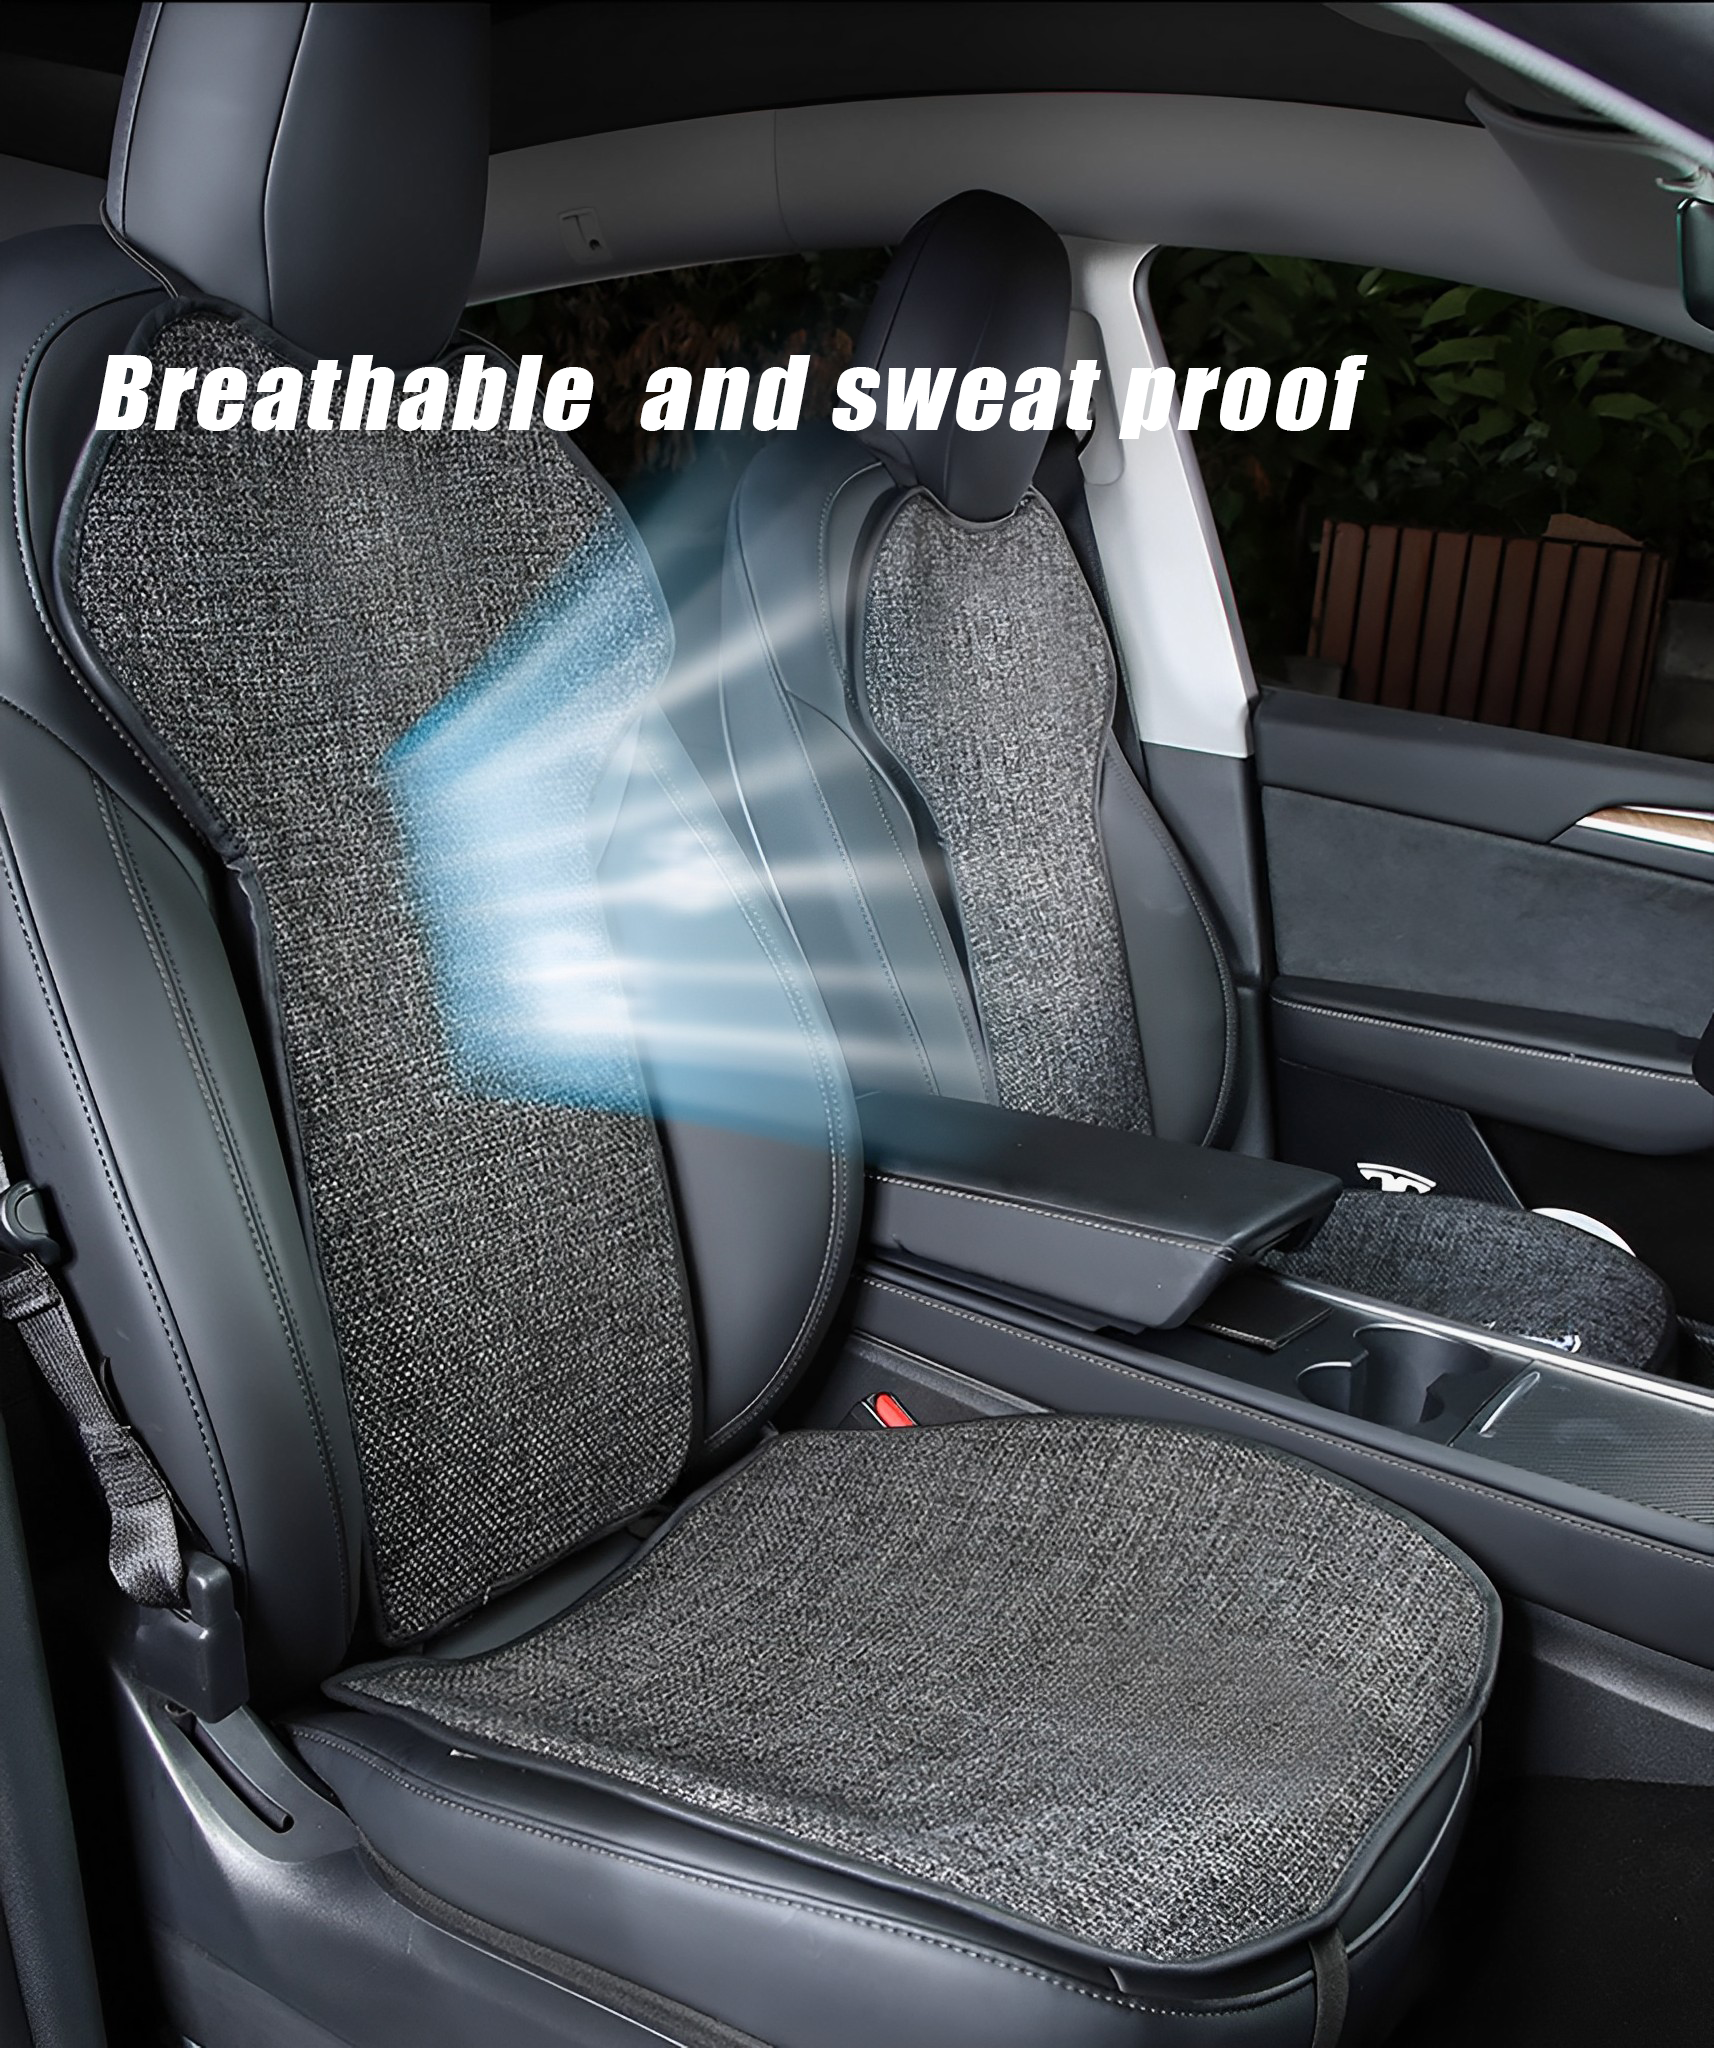 Linen Seat Cover Protector For Tesla Model 3 Model Y Car Interior